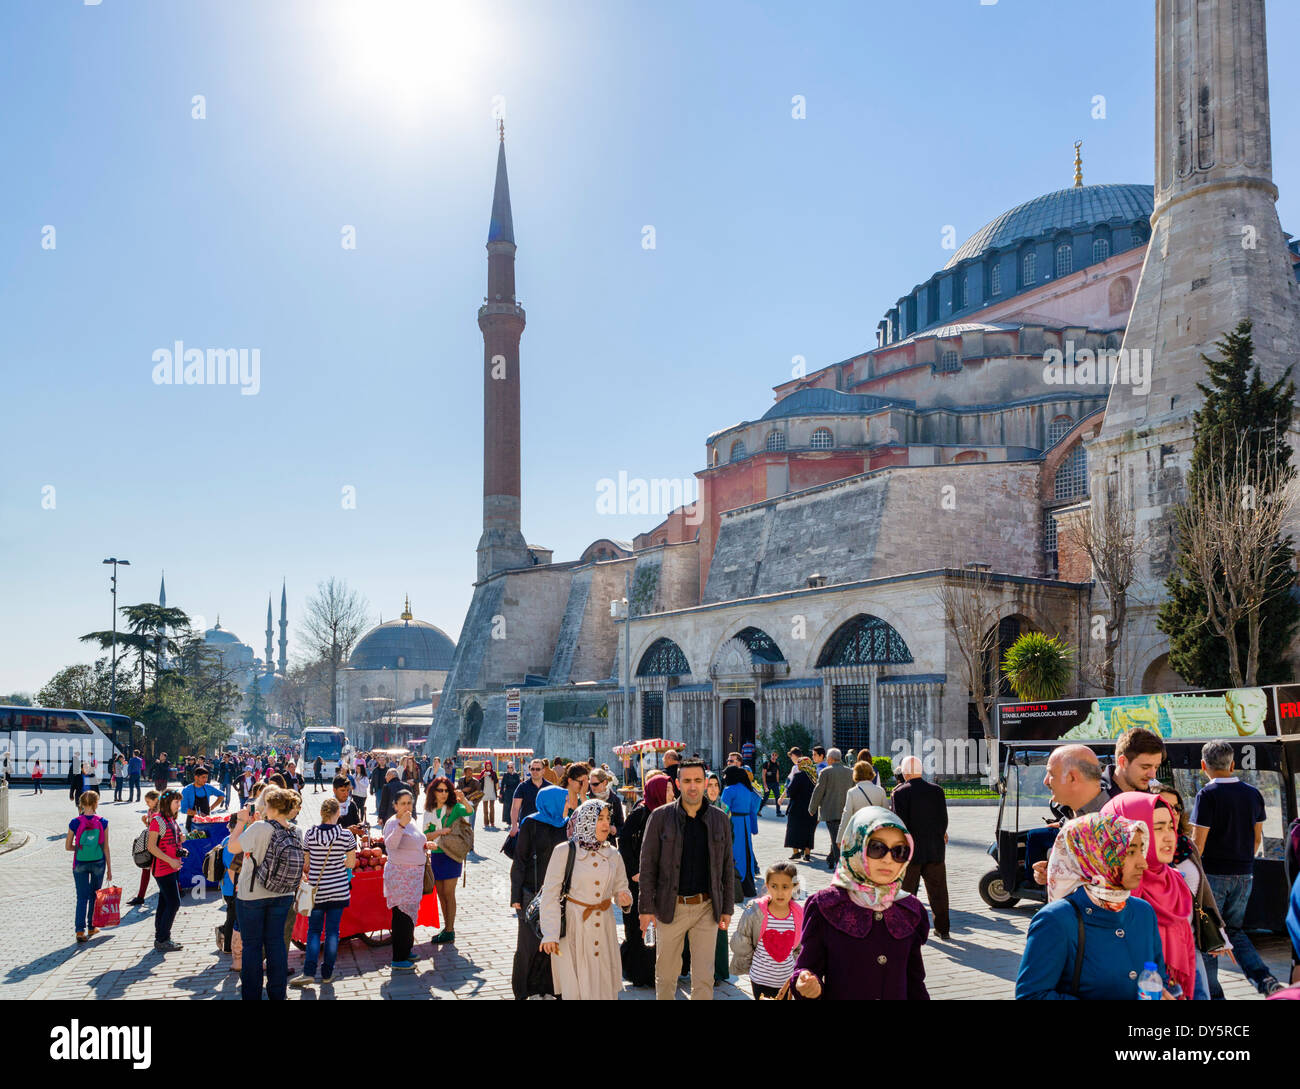 Crowds on Kabasakal Caddesi next to Hagia Sophia (Aya Sofya) looking towards the Blue Mosque (Sultanahmet Camii), Istanbul,Turkey Stock Photo